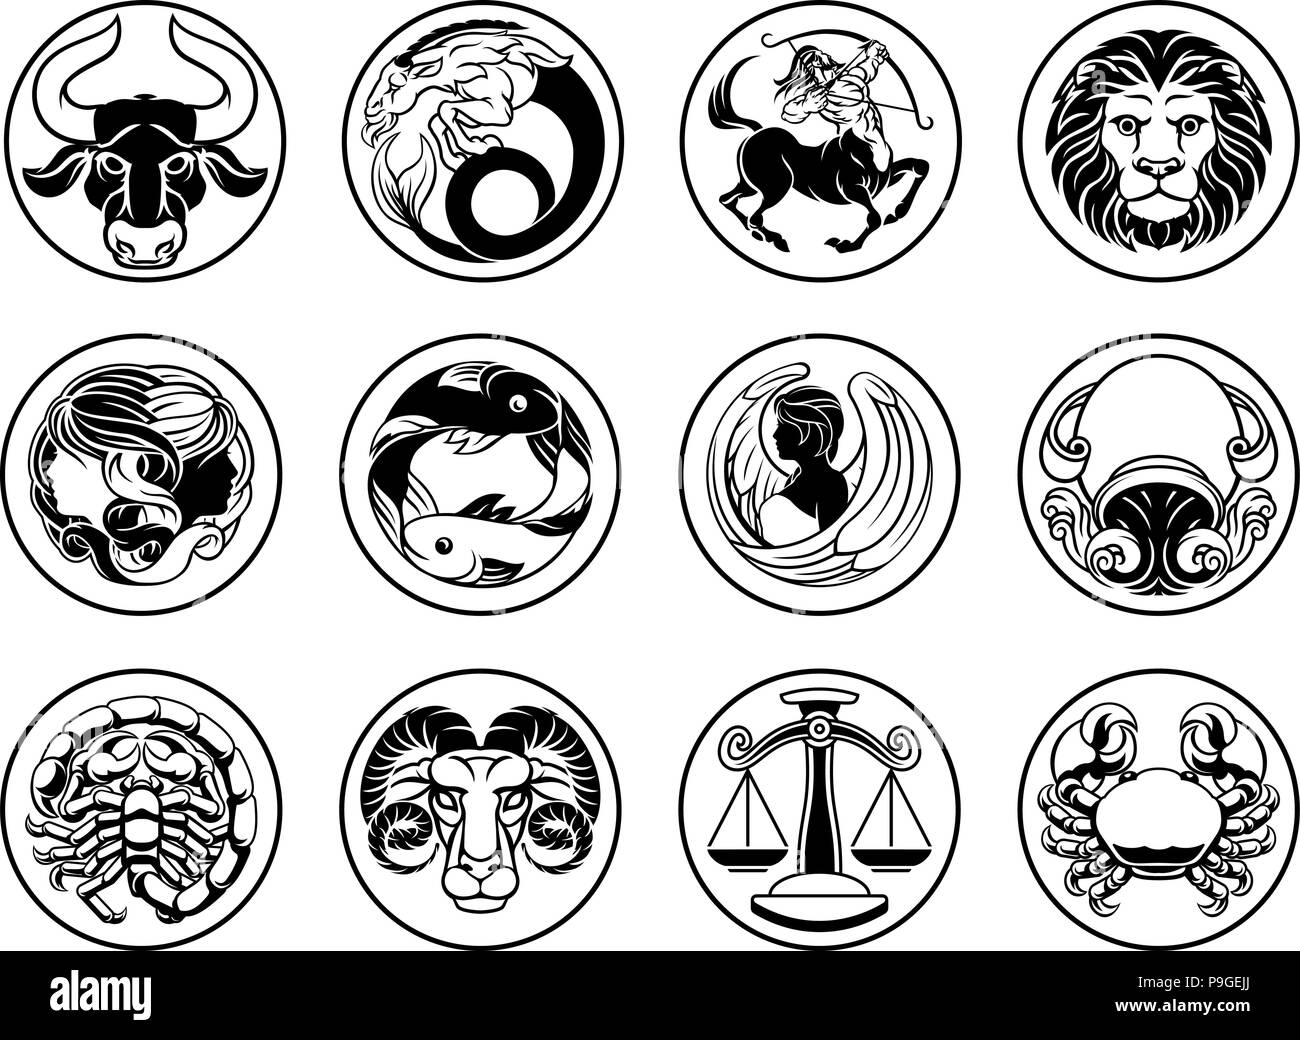 Les signes du zodiaque Astrologie horoscope star jeu de symboles Illustration de Vecteur